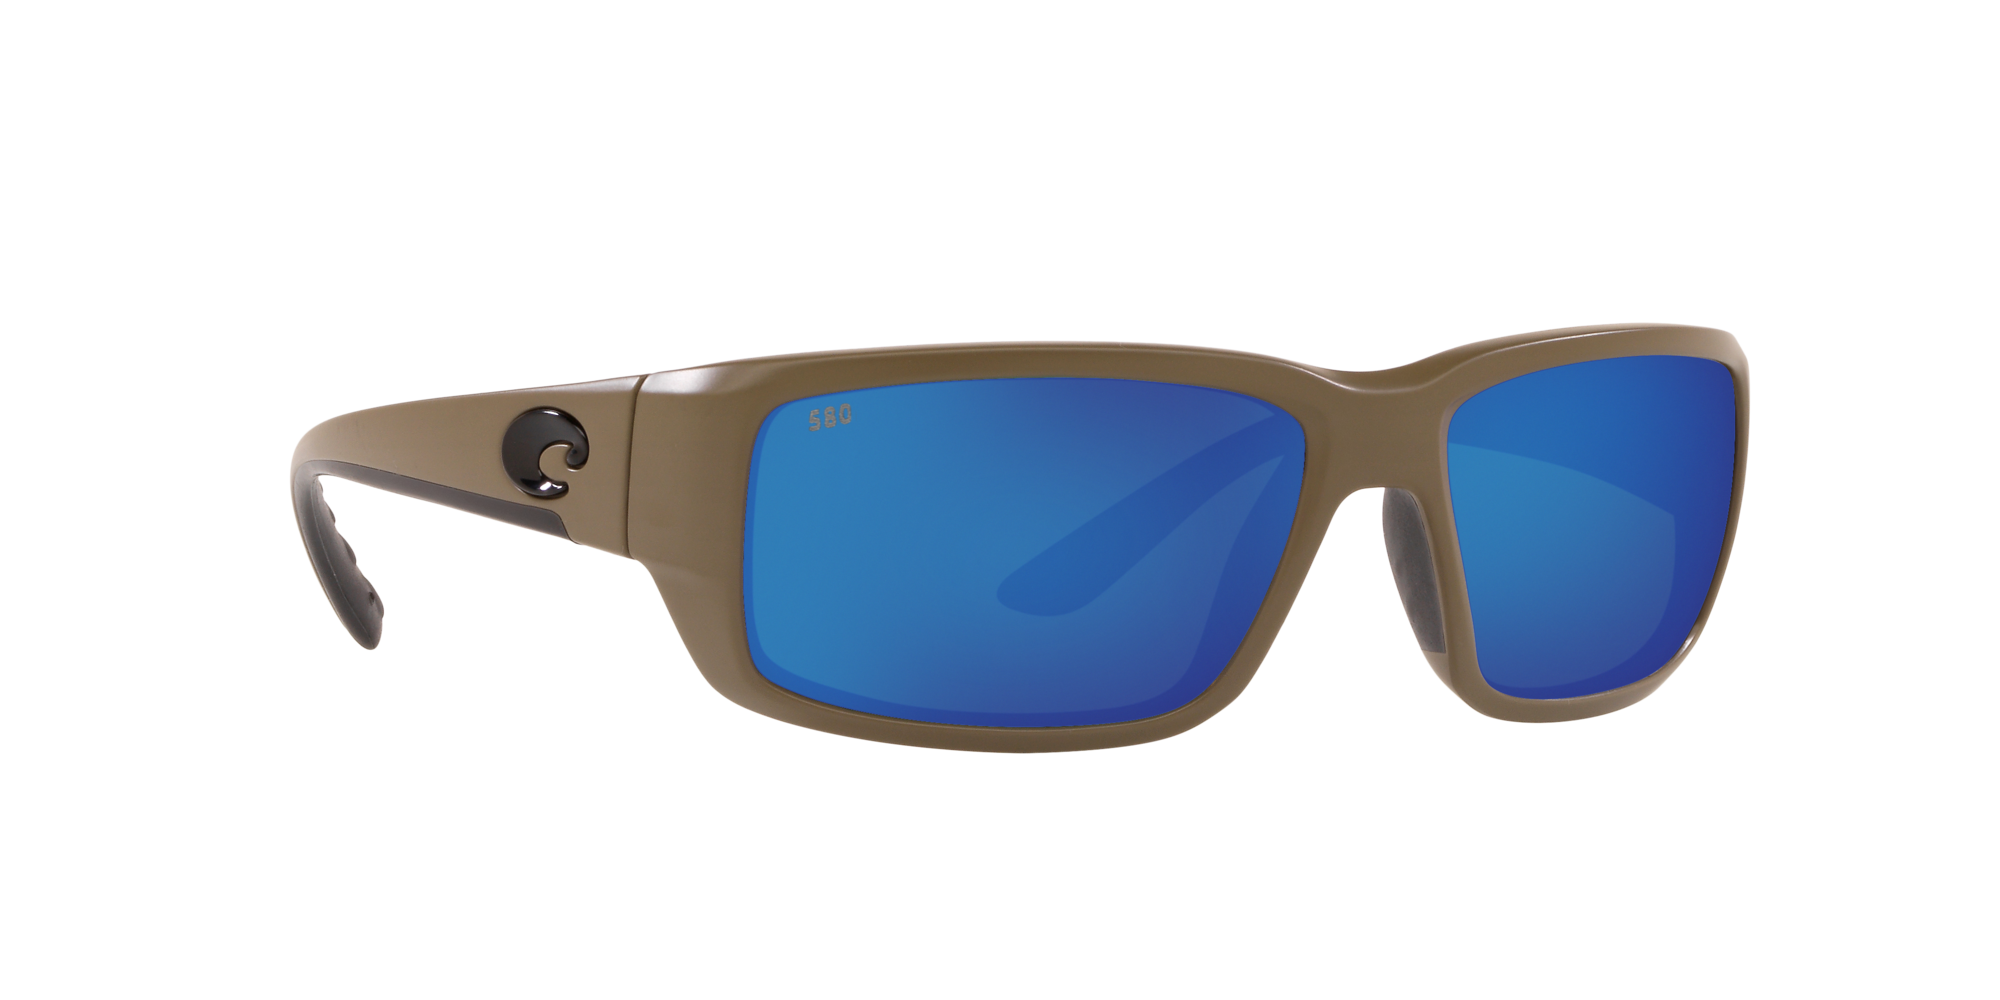 Fantail sunglasses